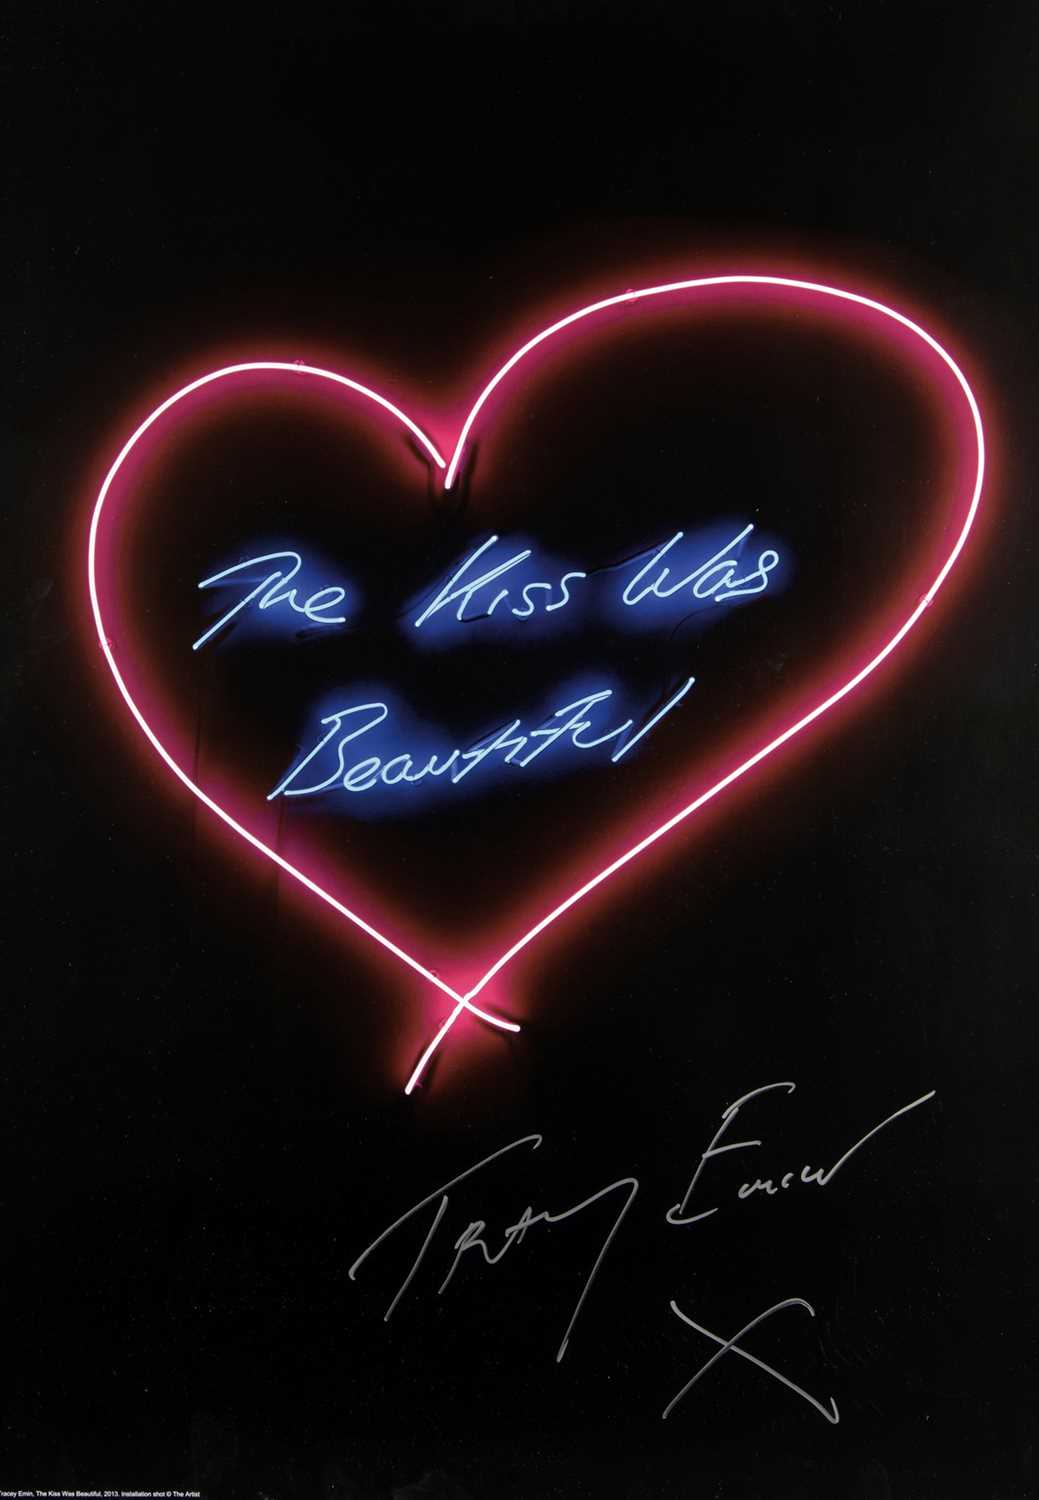 Lot 81 - Tracey Emin (British 1963-), 'The Kiss Was Beautiful’, 2016